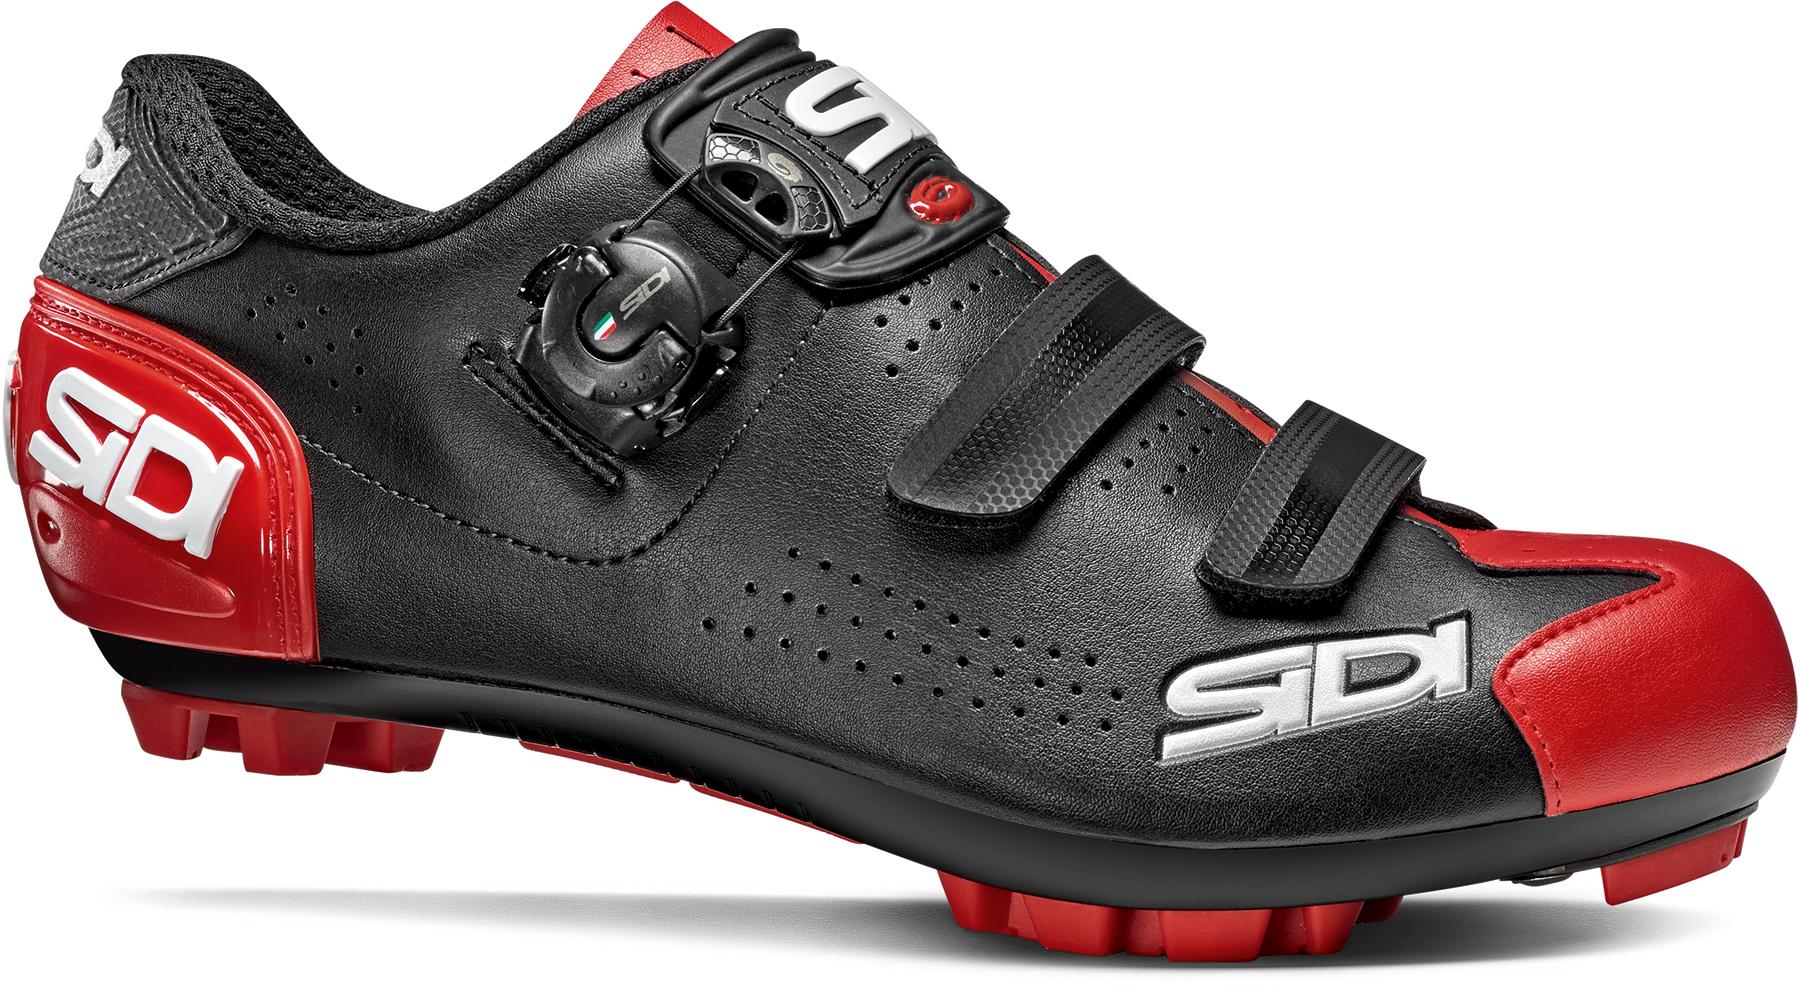 Sidi Trace 2 Mtb Cycling Shoes - Black/red